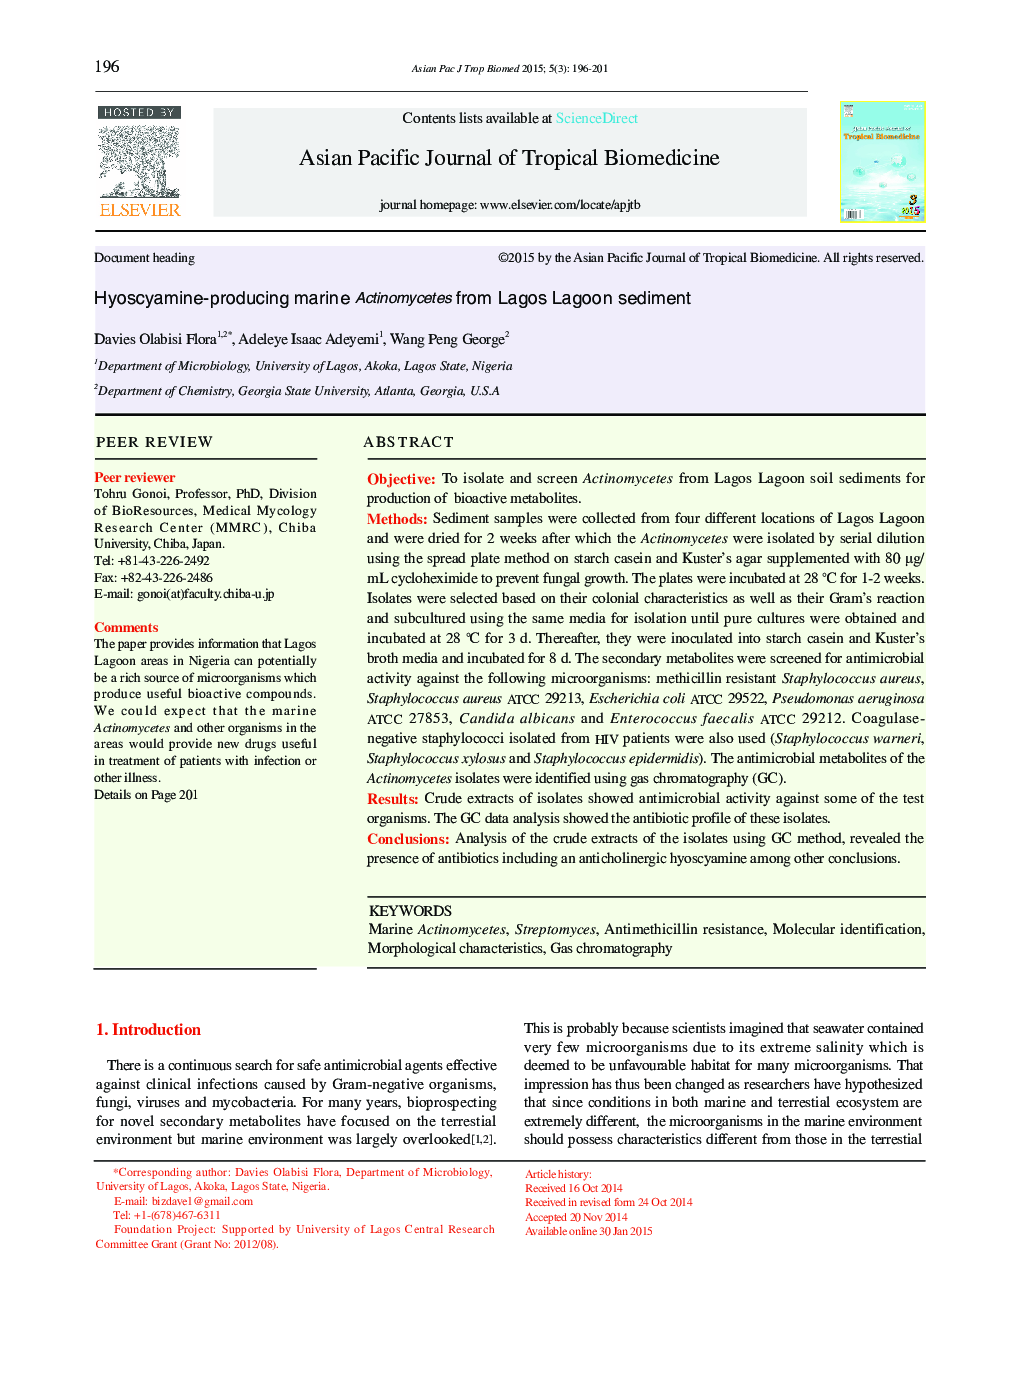 Hyoscyamine-producing marine Actinomycetes from Lagos Lagoon sediment 